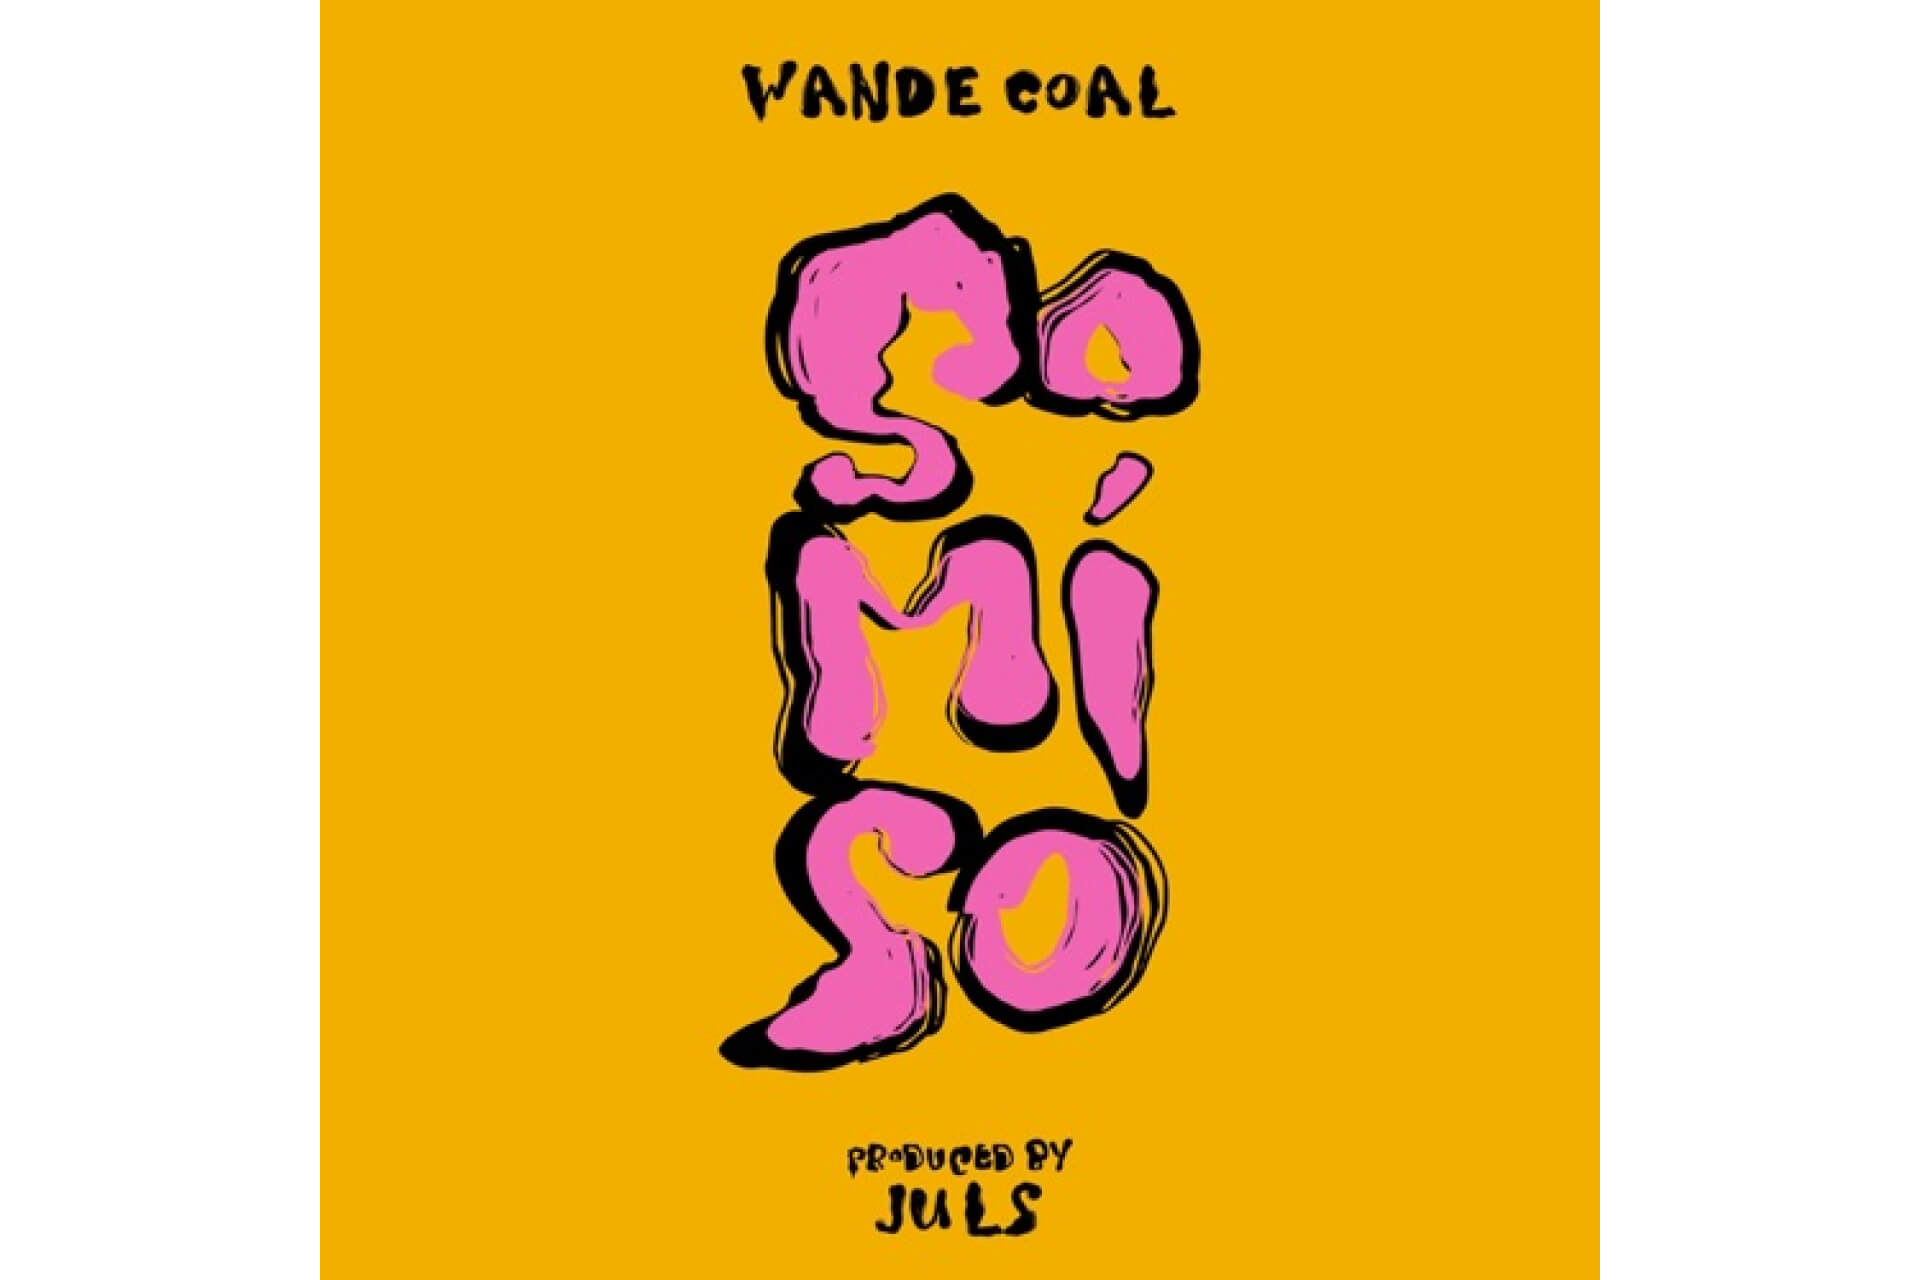 Wande Coal - So Mi So